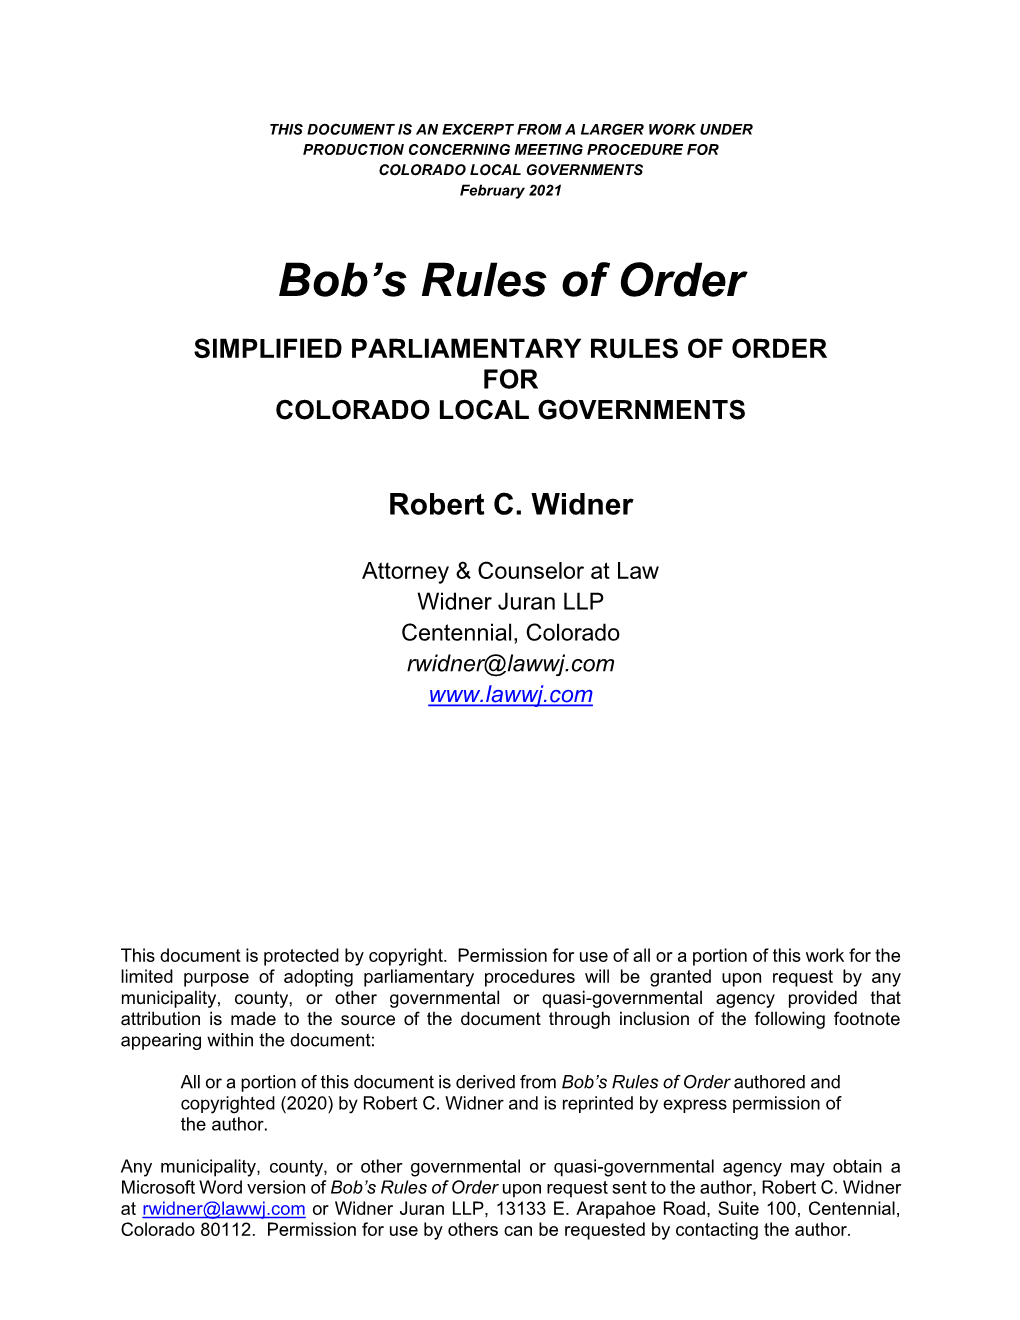 Bob's Rules of Order